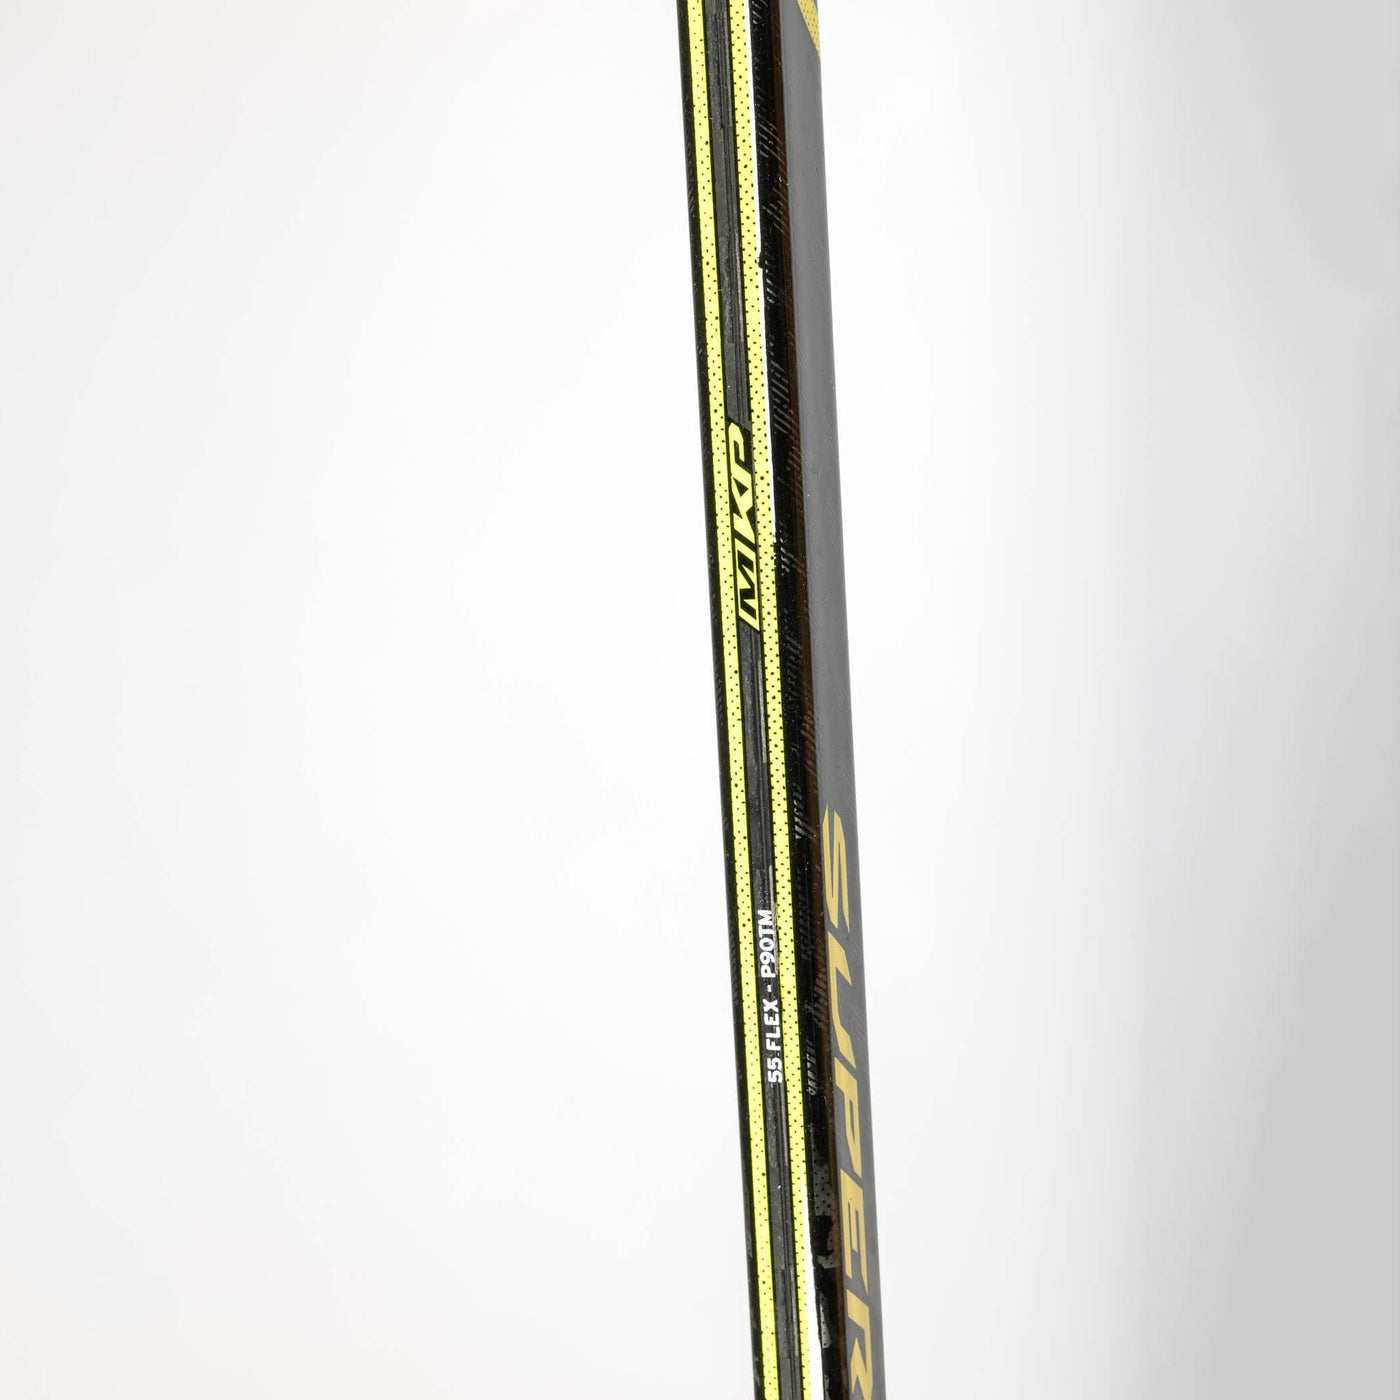 CCM Super Tacks AS3 Pro Intermediate Hockey Stick